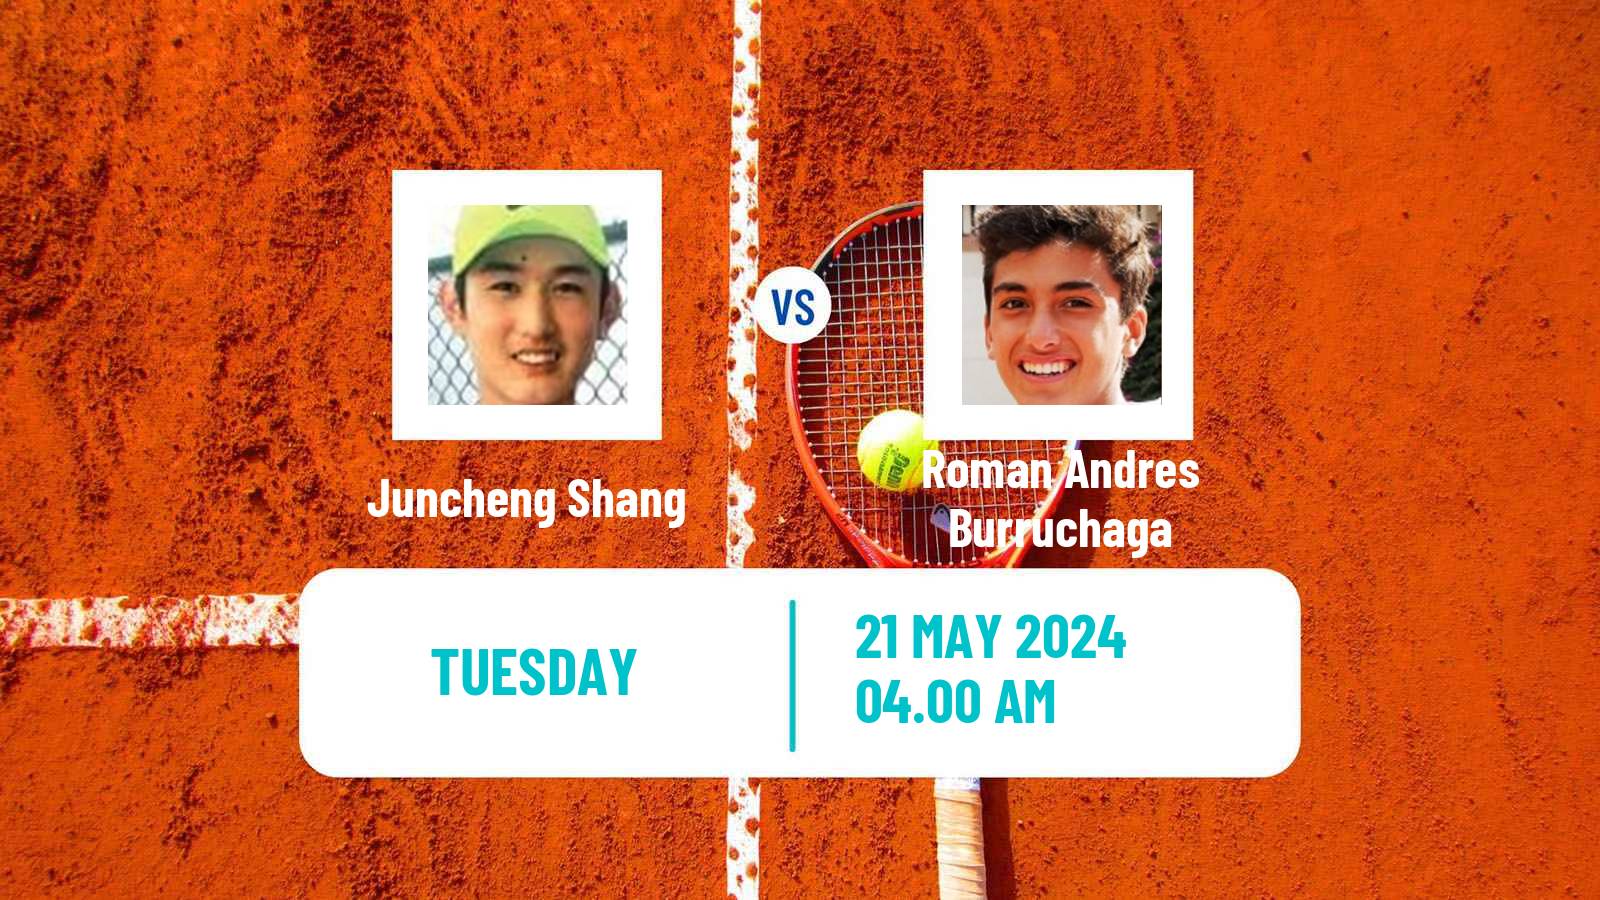 Tennis ATP Roland Garros Juncheng Shang - Roman Andres Burruchaga